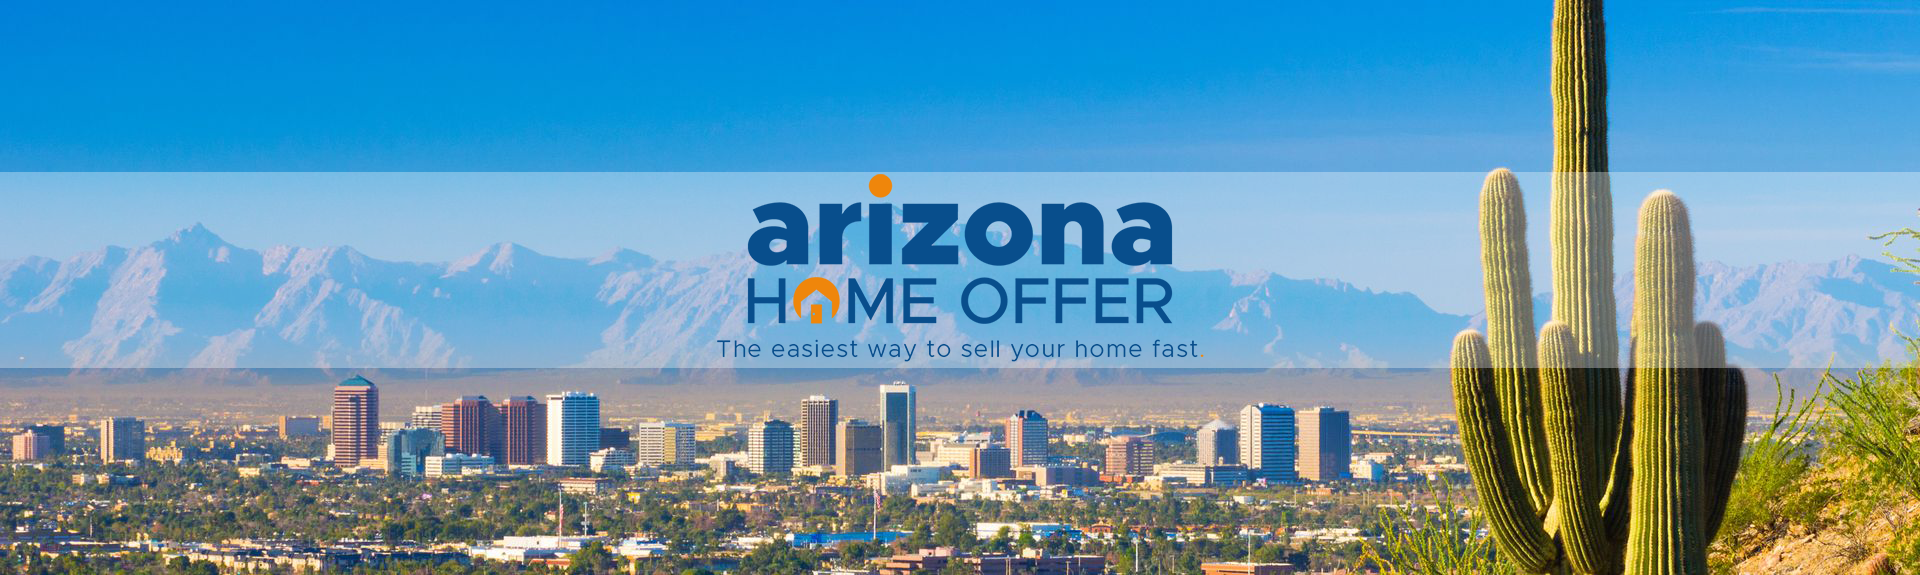 Arizona Home Offer